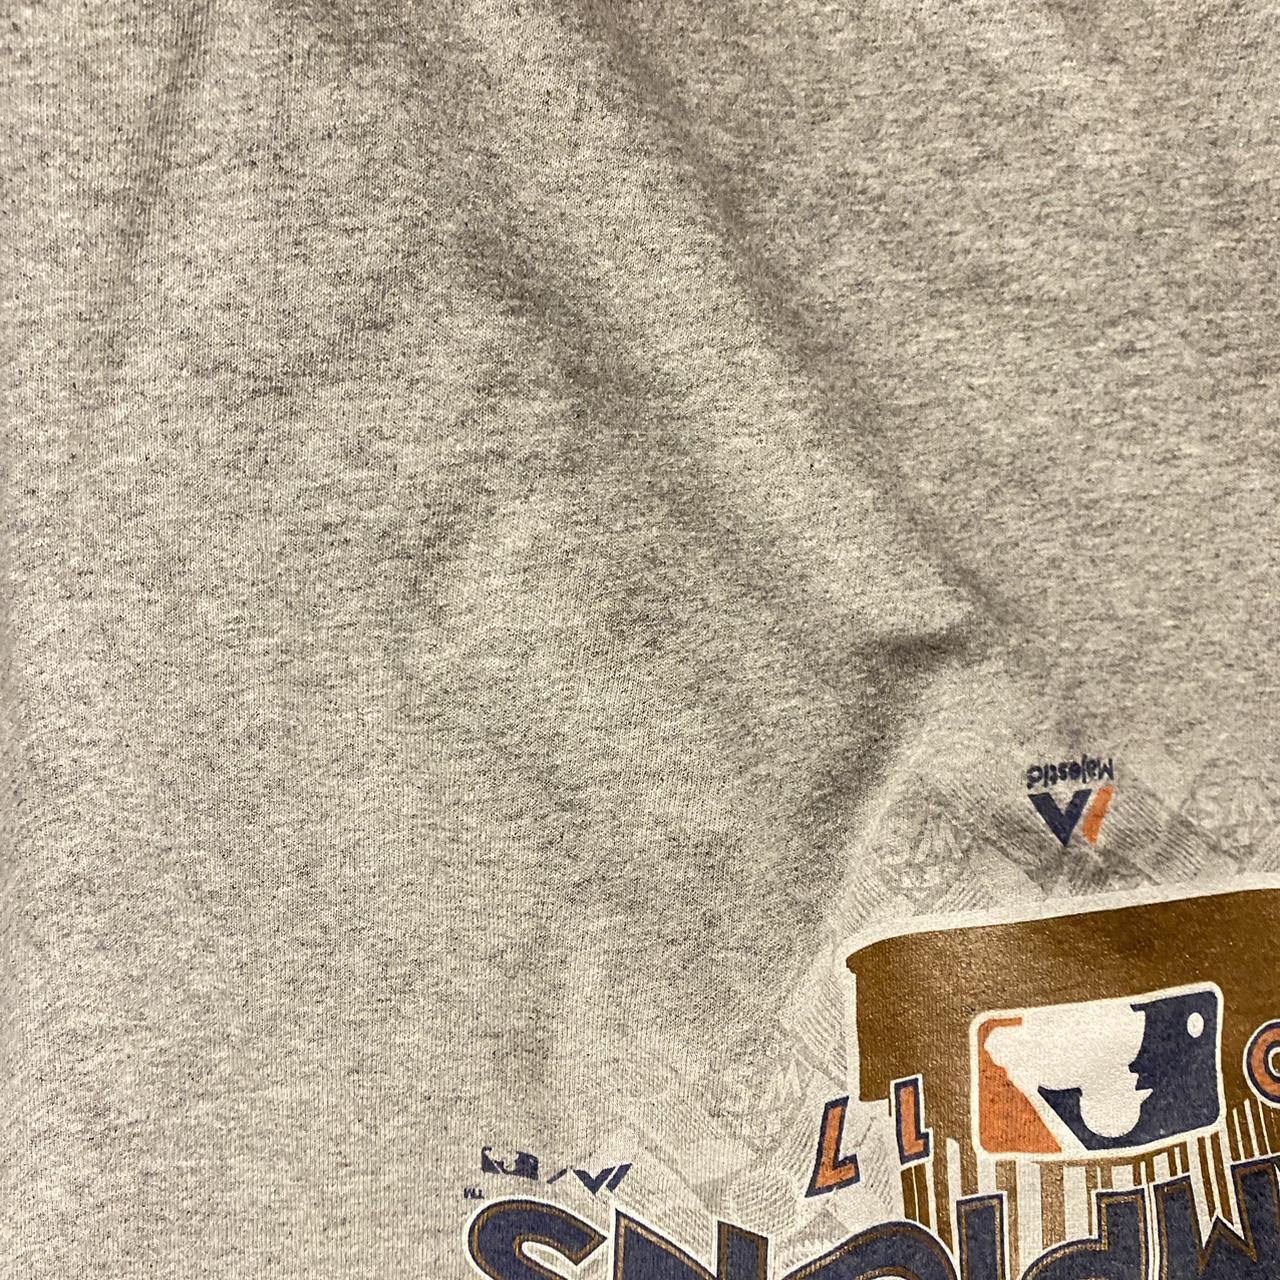 Majestic Houston Astros Postseason T-Shirt Never - Depop